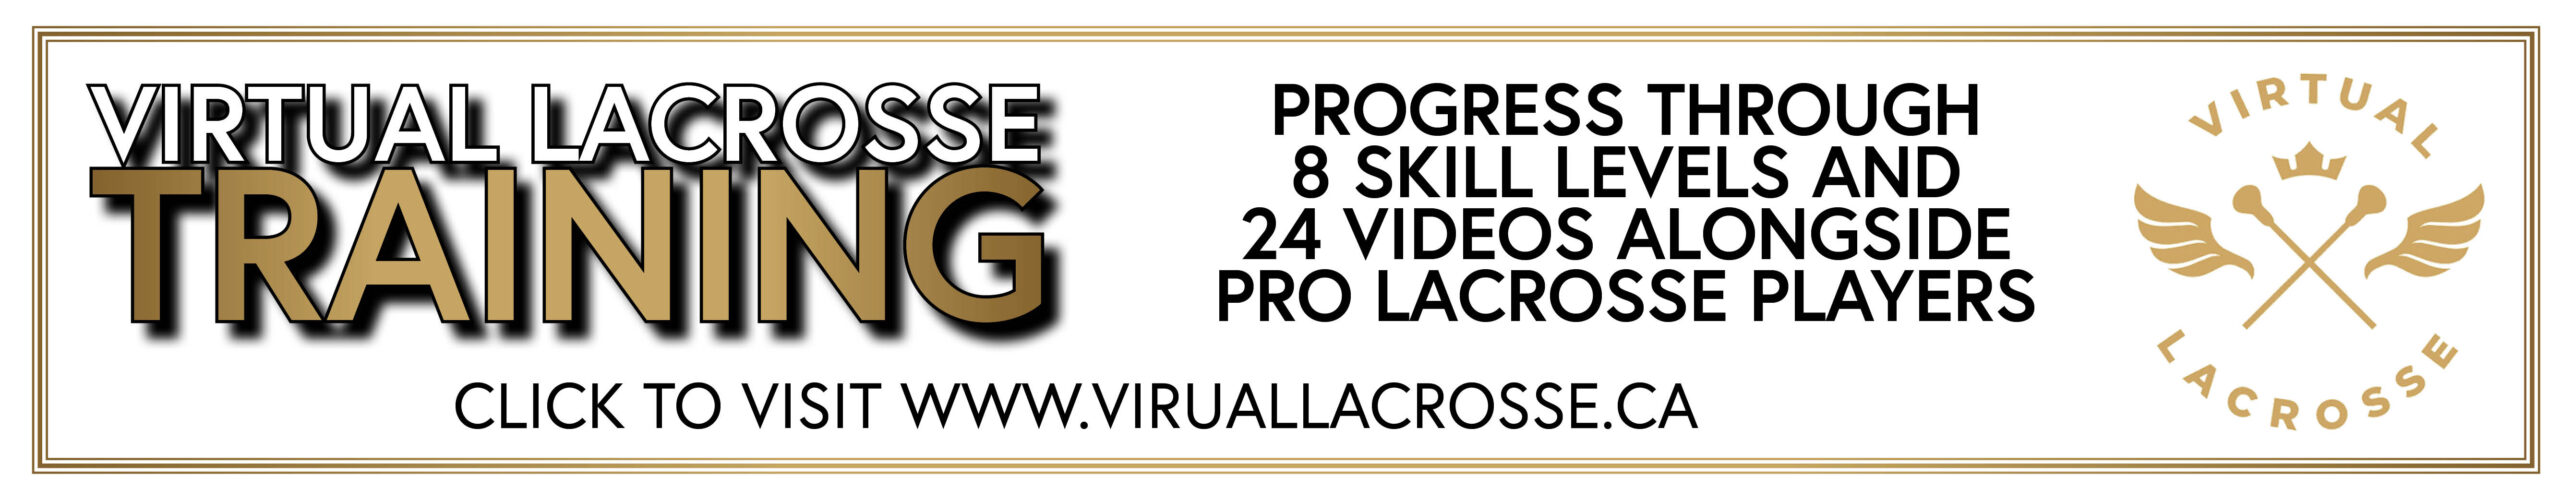 Virtual lacrosse ad